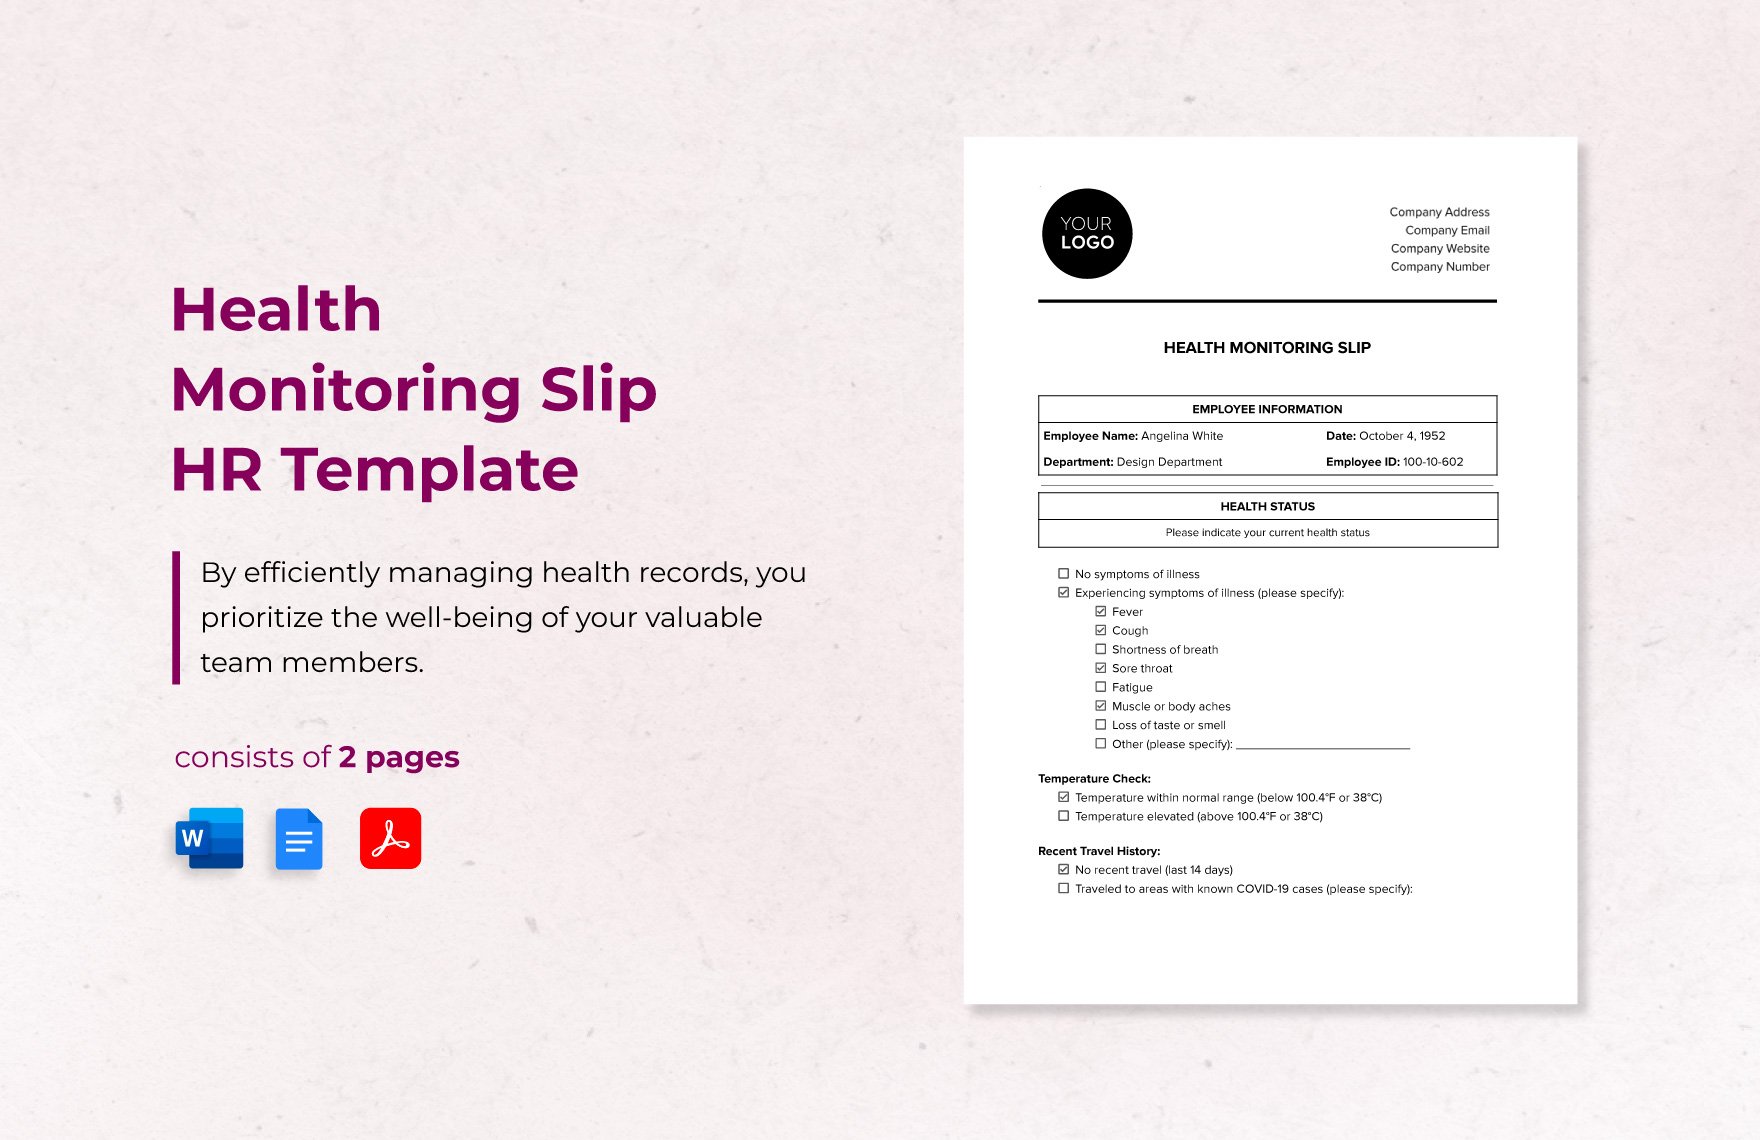 Health Monitoring Slip HR Template